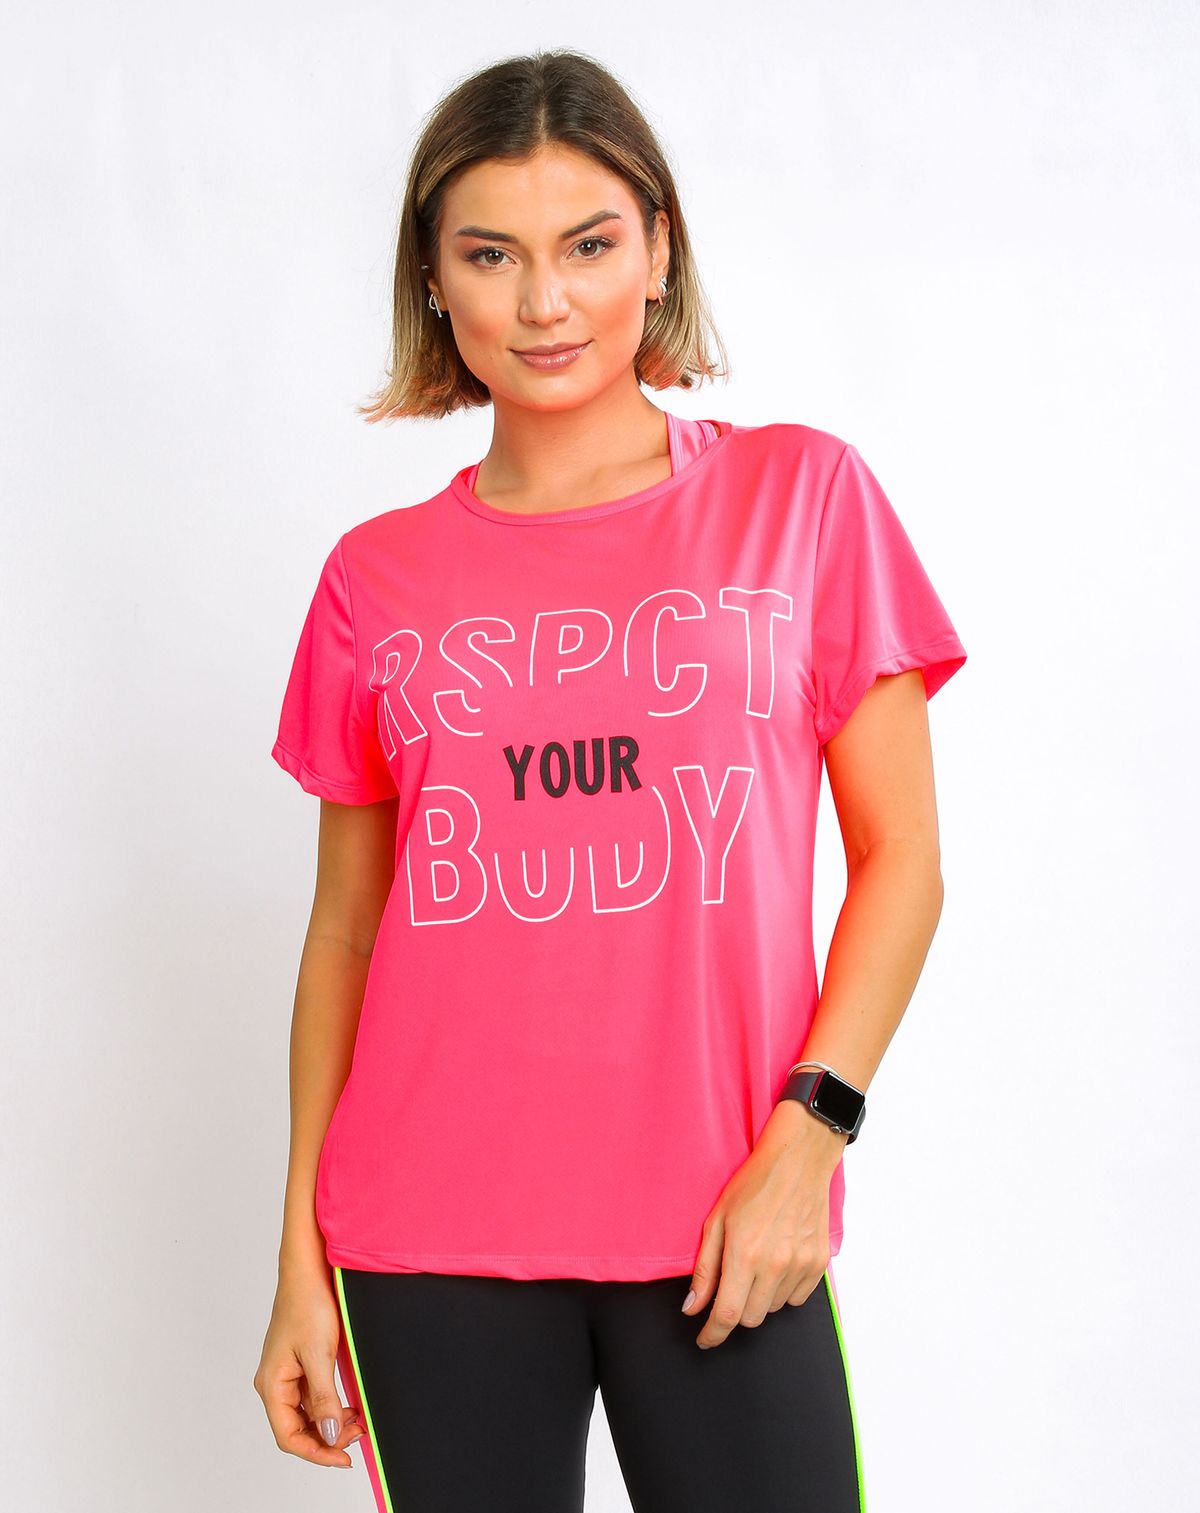 647627006-camiseta-manga-curta-fitness-feminina-estampada---pink-pink-m-107